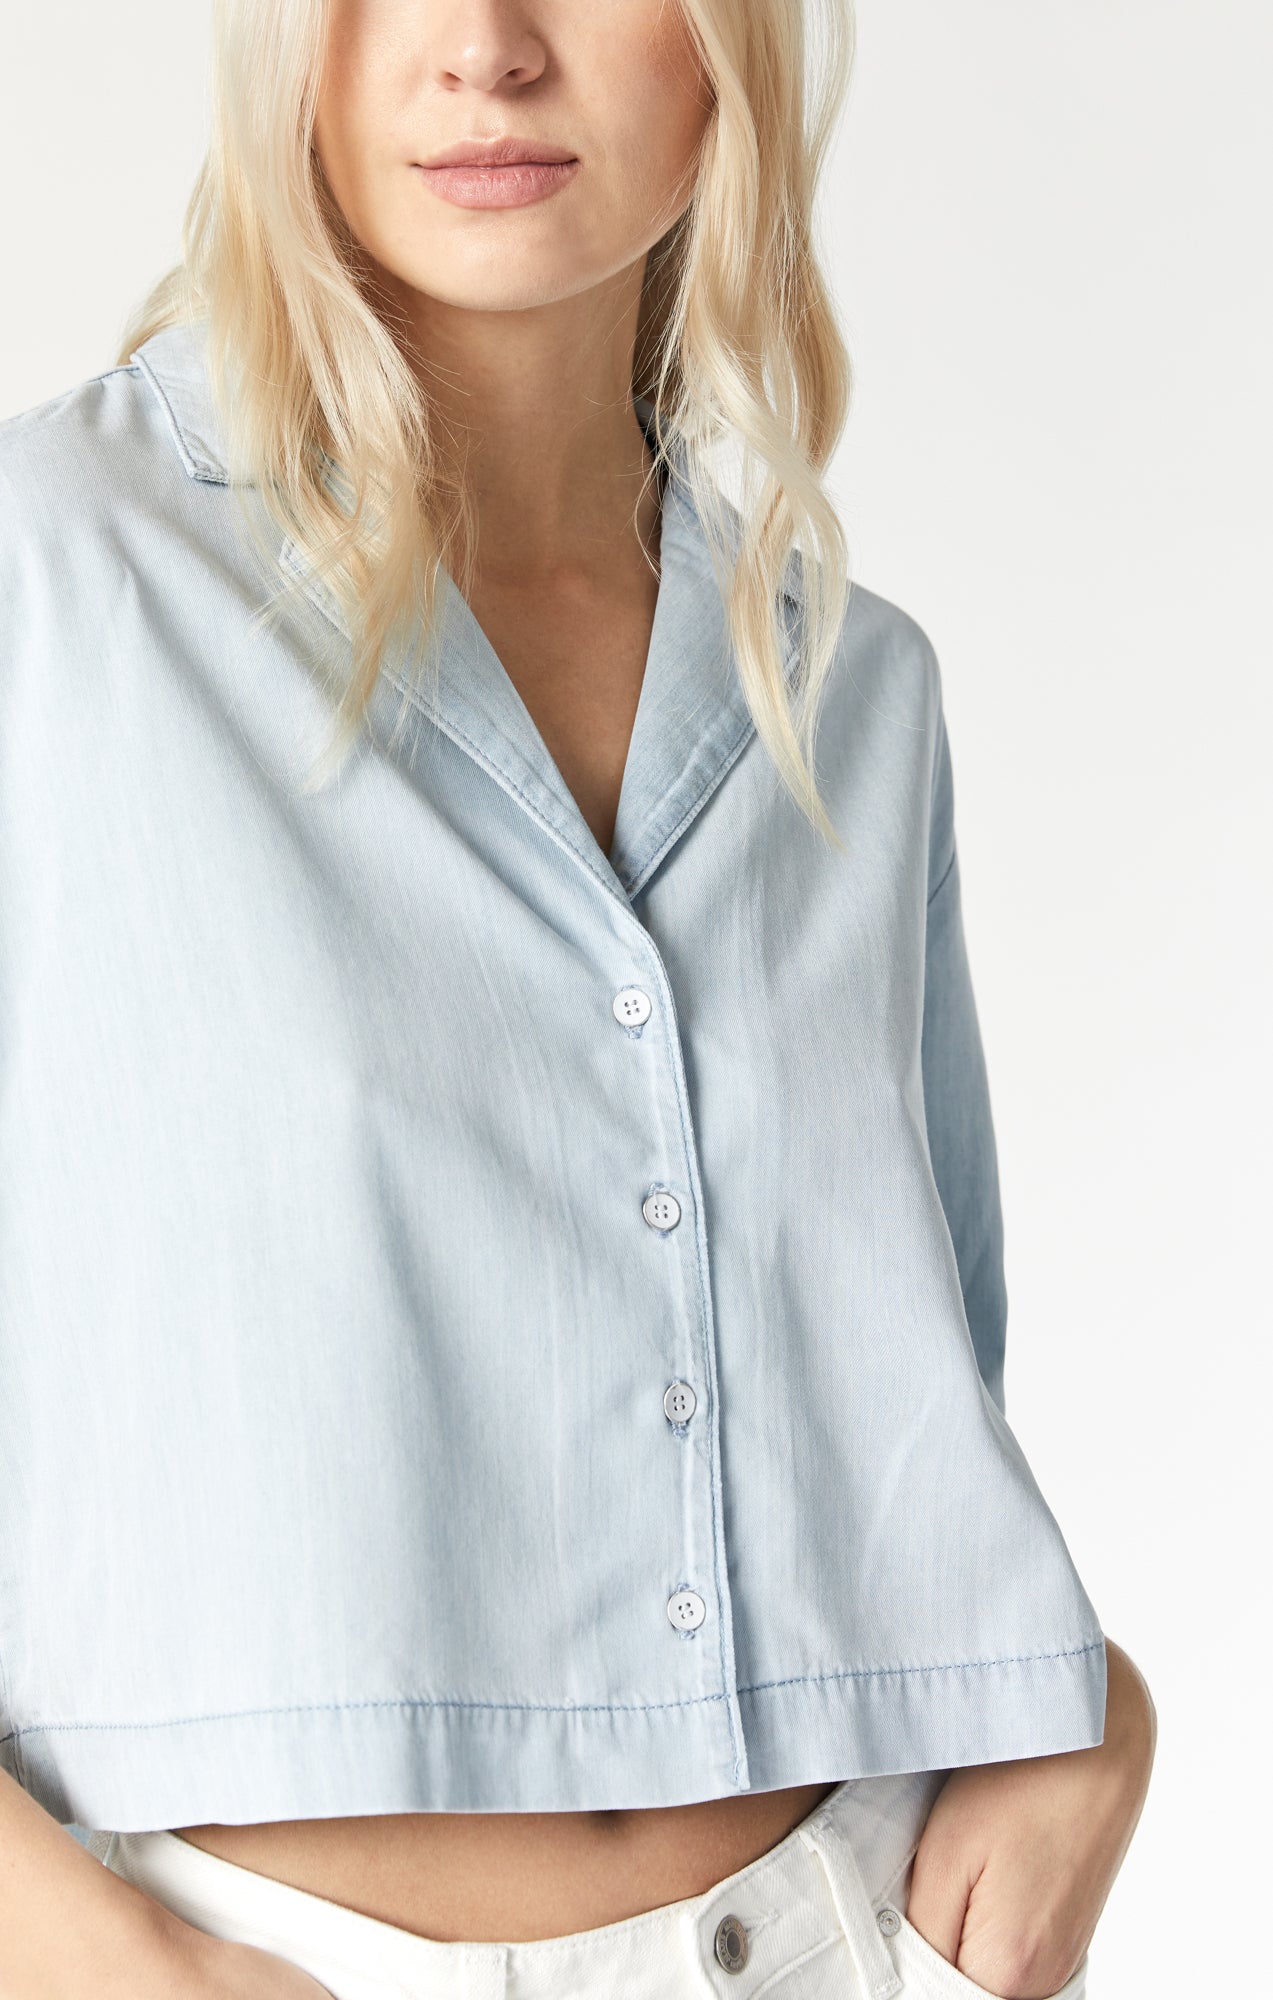 Blue Sun Protective Button-Down Shirt – Castleberry Shop